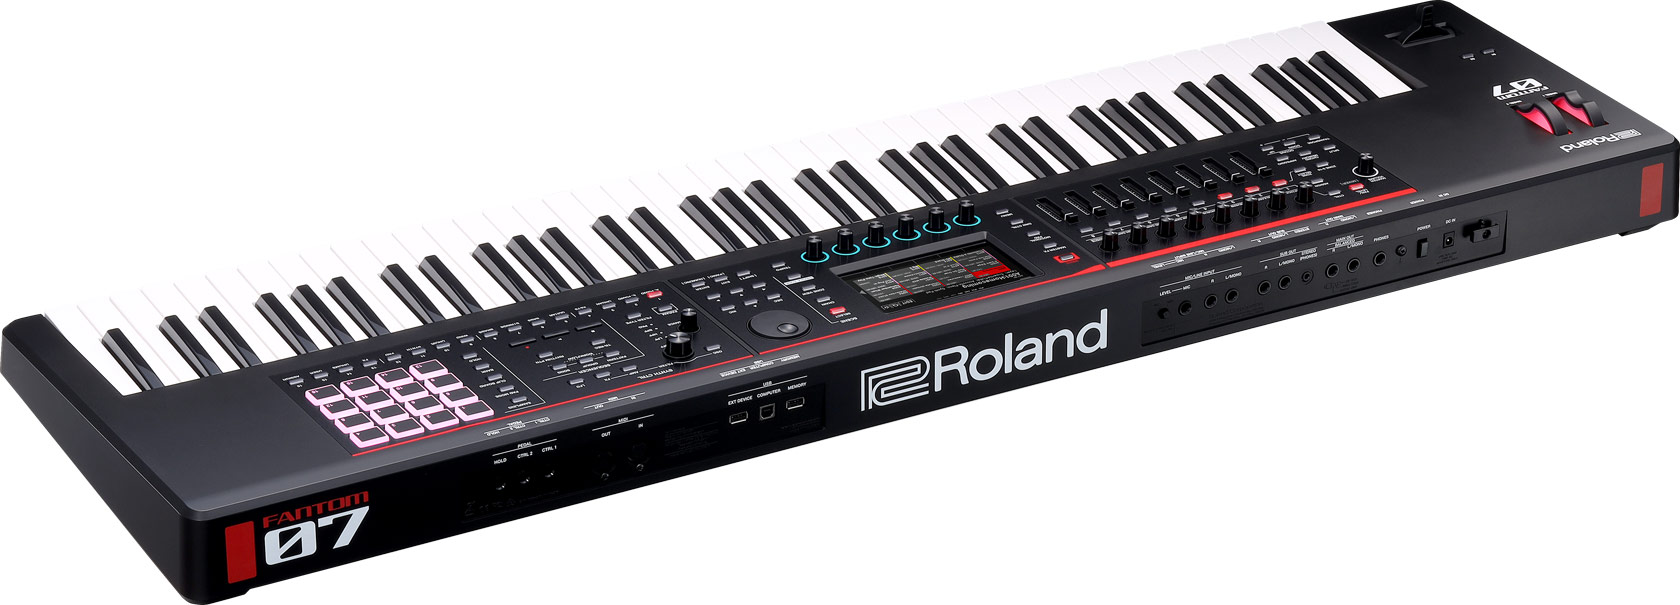 Roland FANTOM-07 Workstation Synthesizer